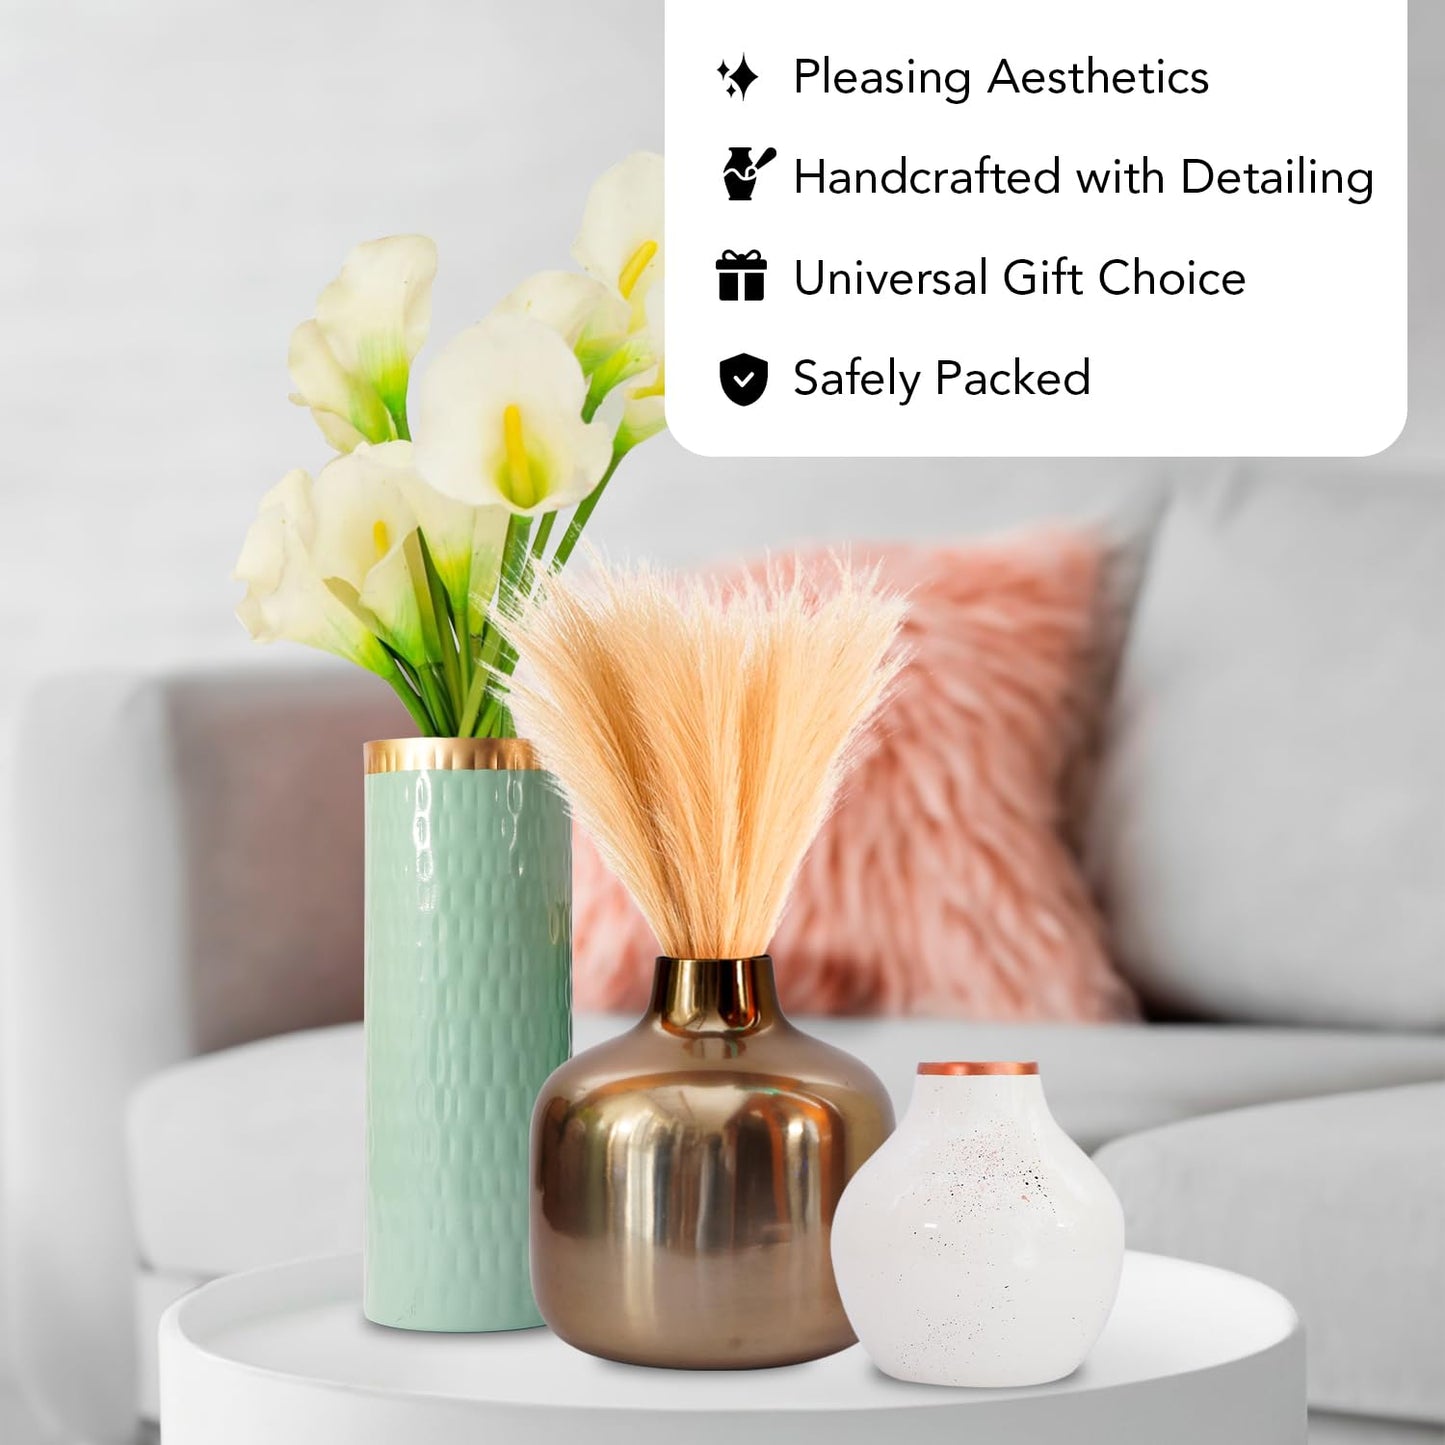 Ekhasa Unbreakable Metallic Blue Flower Vase for Home Decor | Aesthetic Vase Gift for Wedding, Housewarming, Parties | Decorative Metal Vase for Living Room, Dining Table, Office (Set of 2)